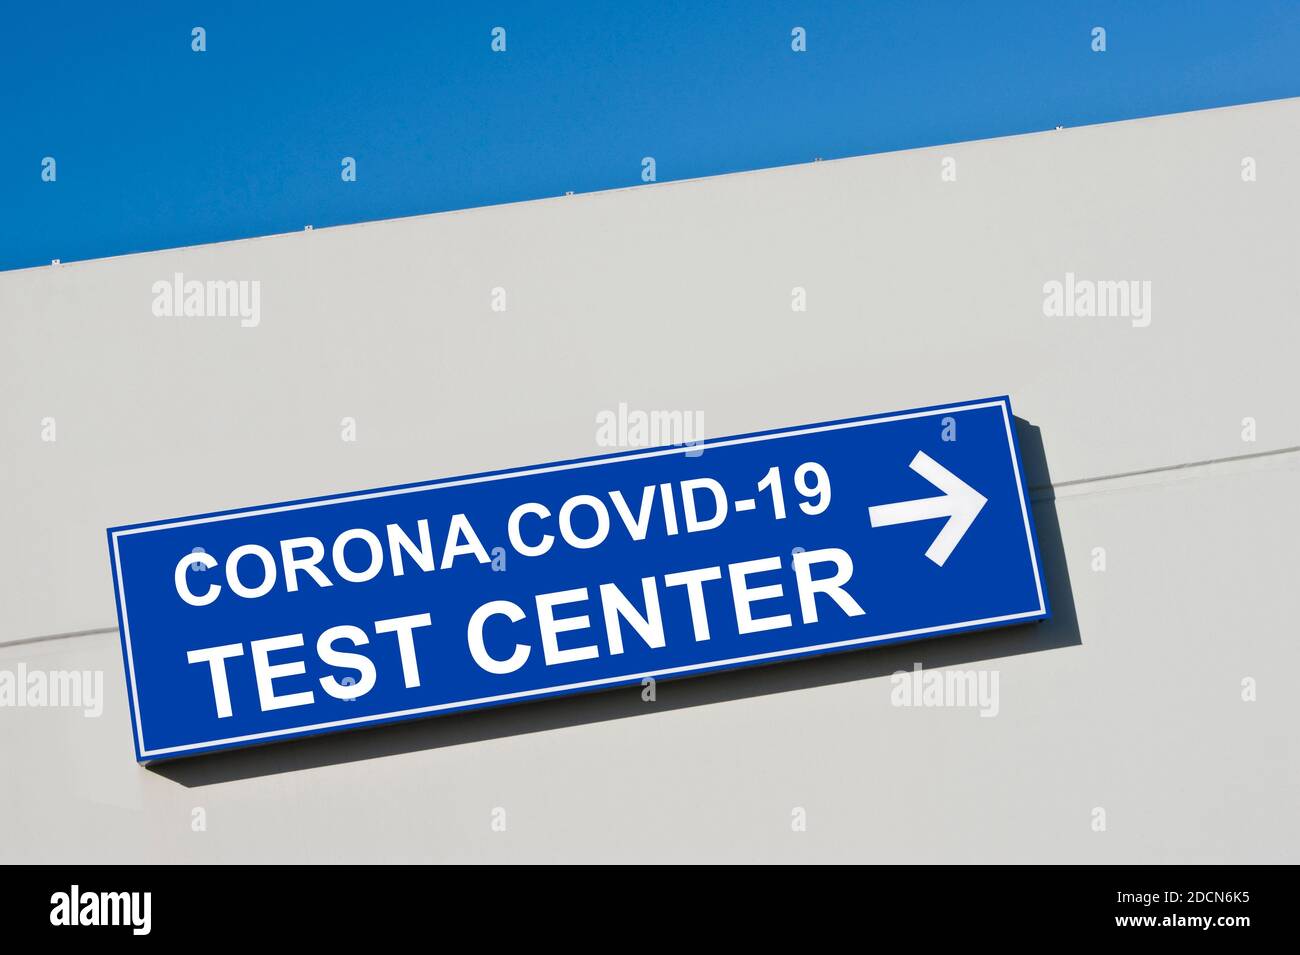 Corona Covid-19 Test Center Sign Stock Photo